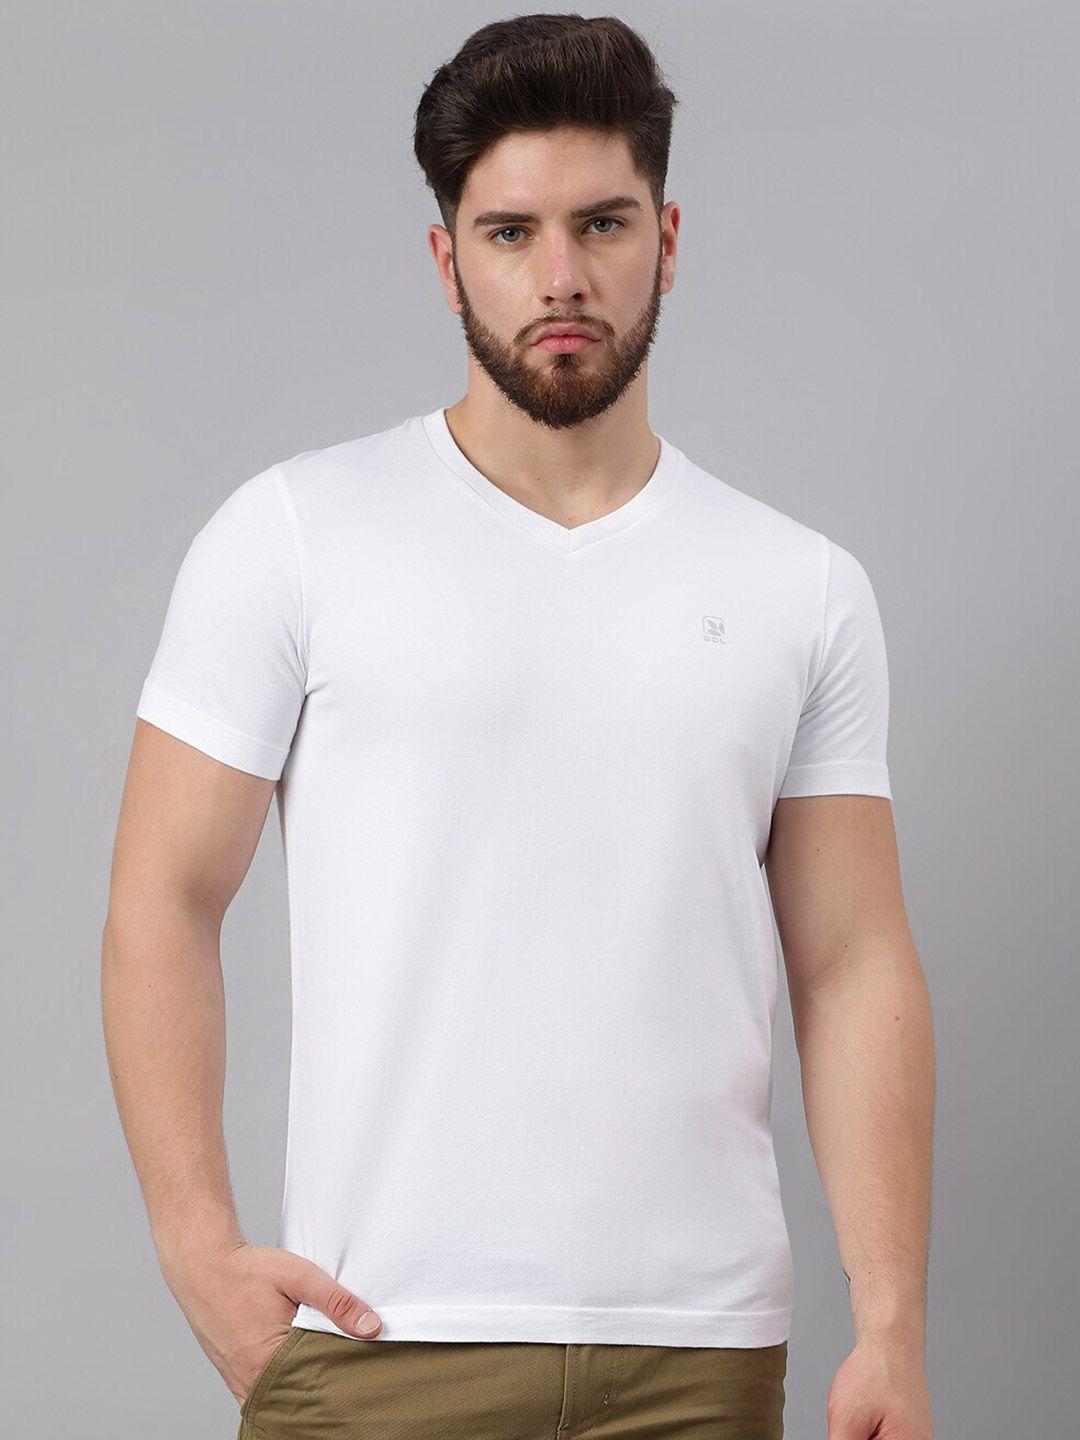 woodland v-neck short sleeves cotton casual t-shirt